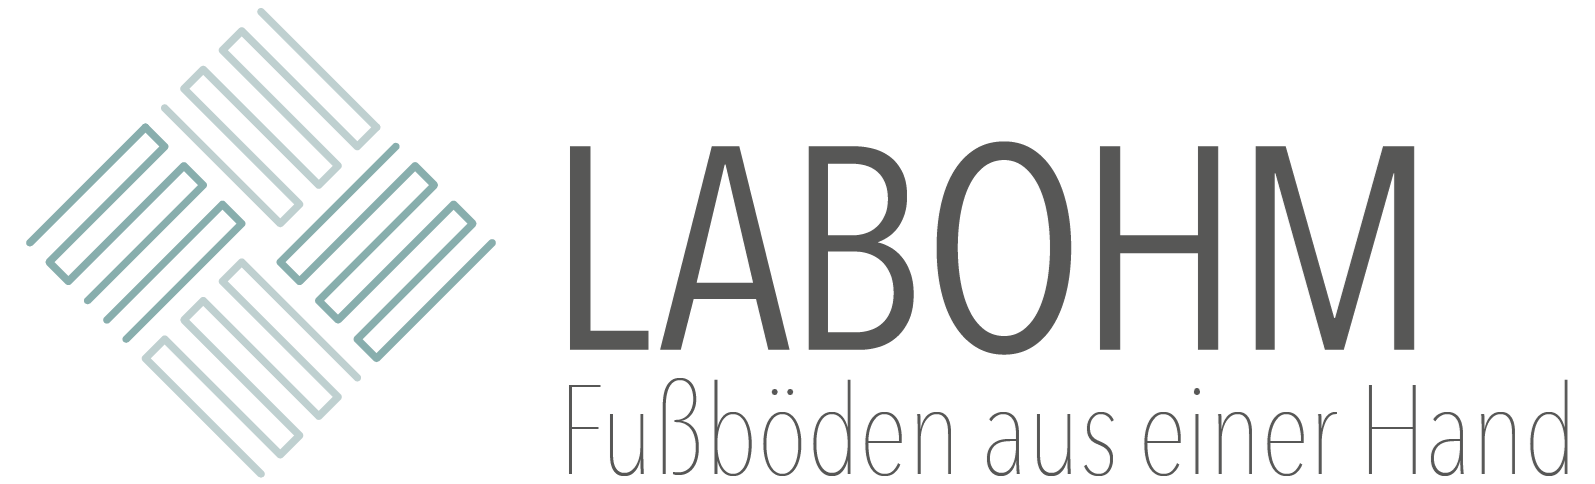 Labohm Fußbodentechnik GmbH Logo